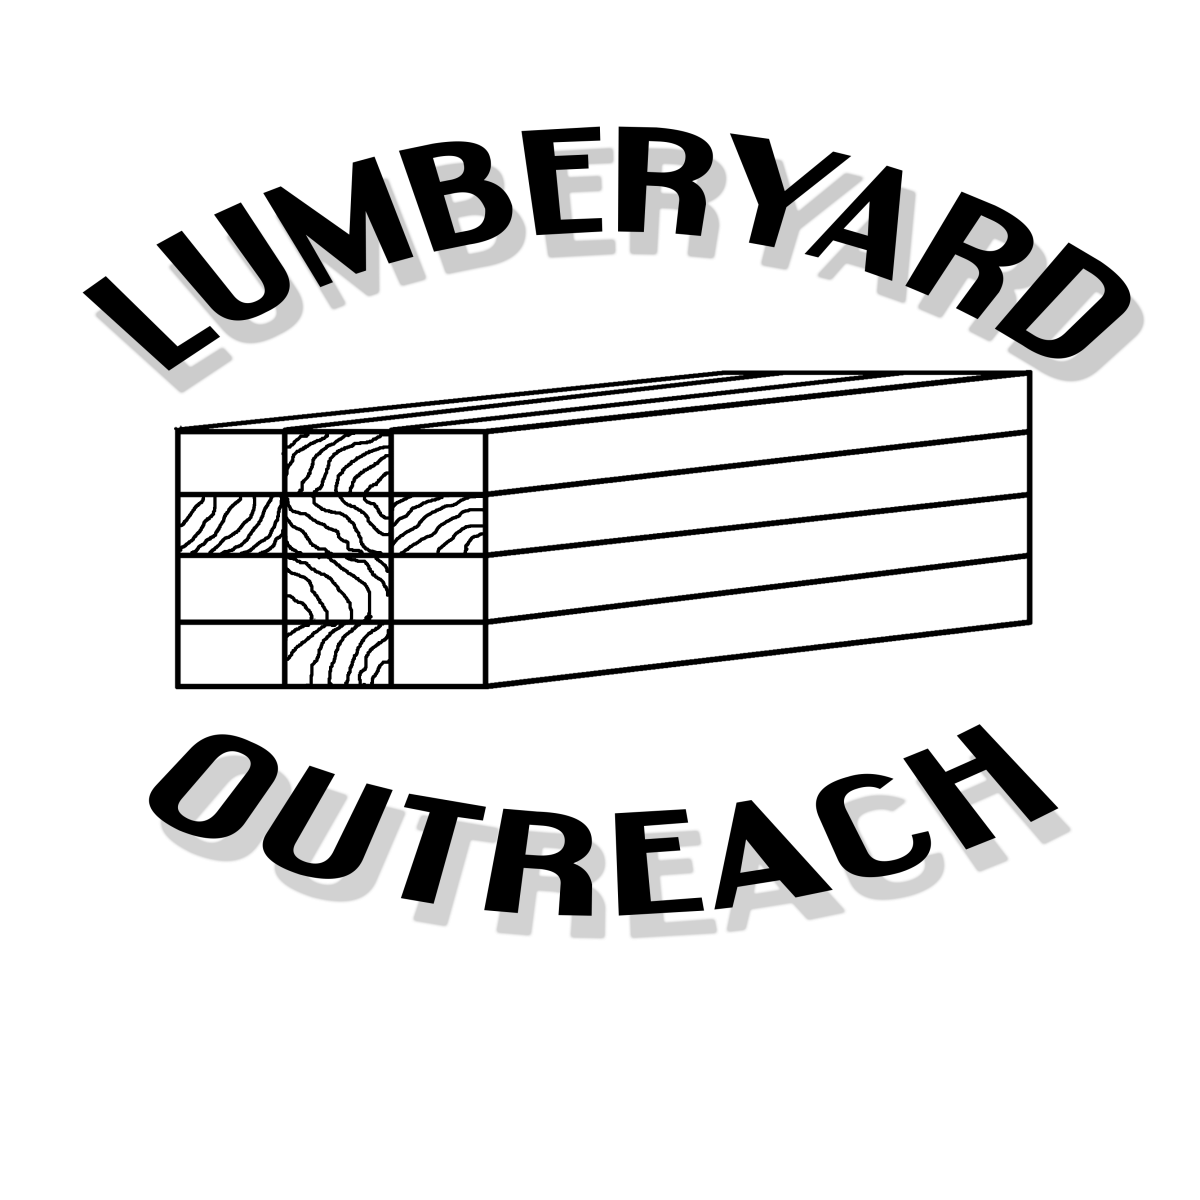 The Lumberyard Outreach